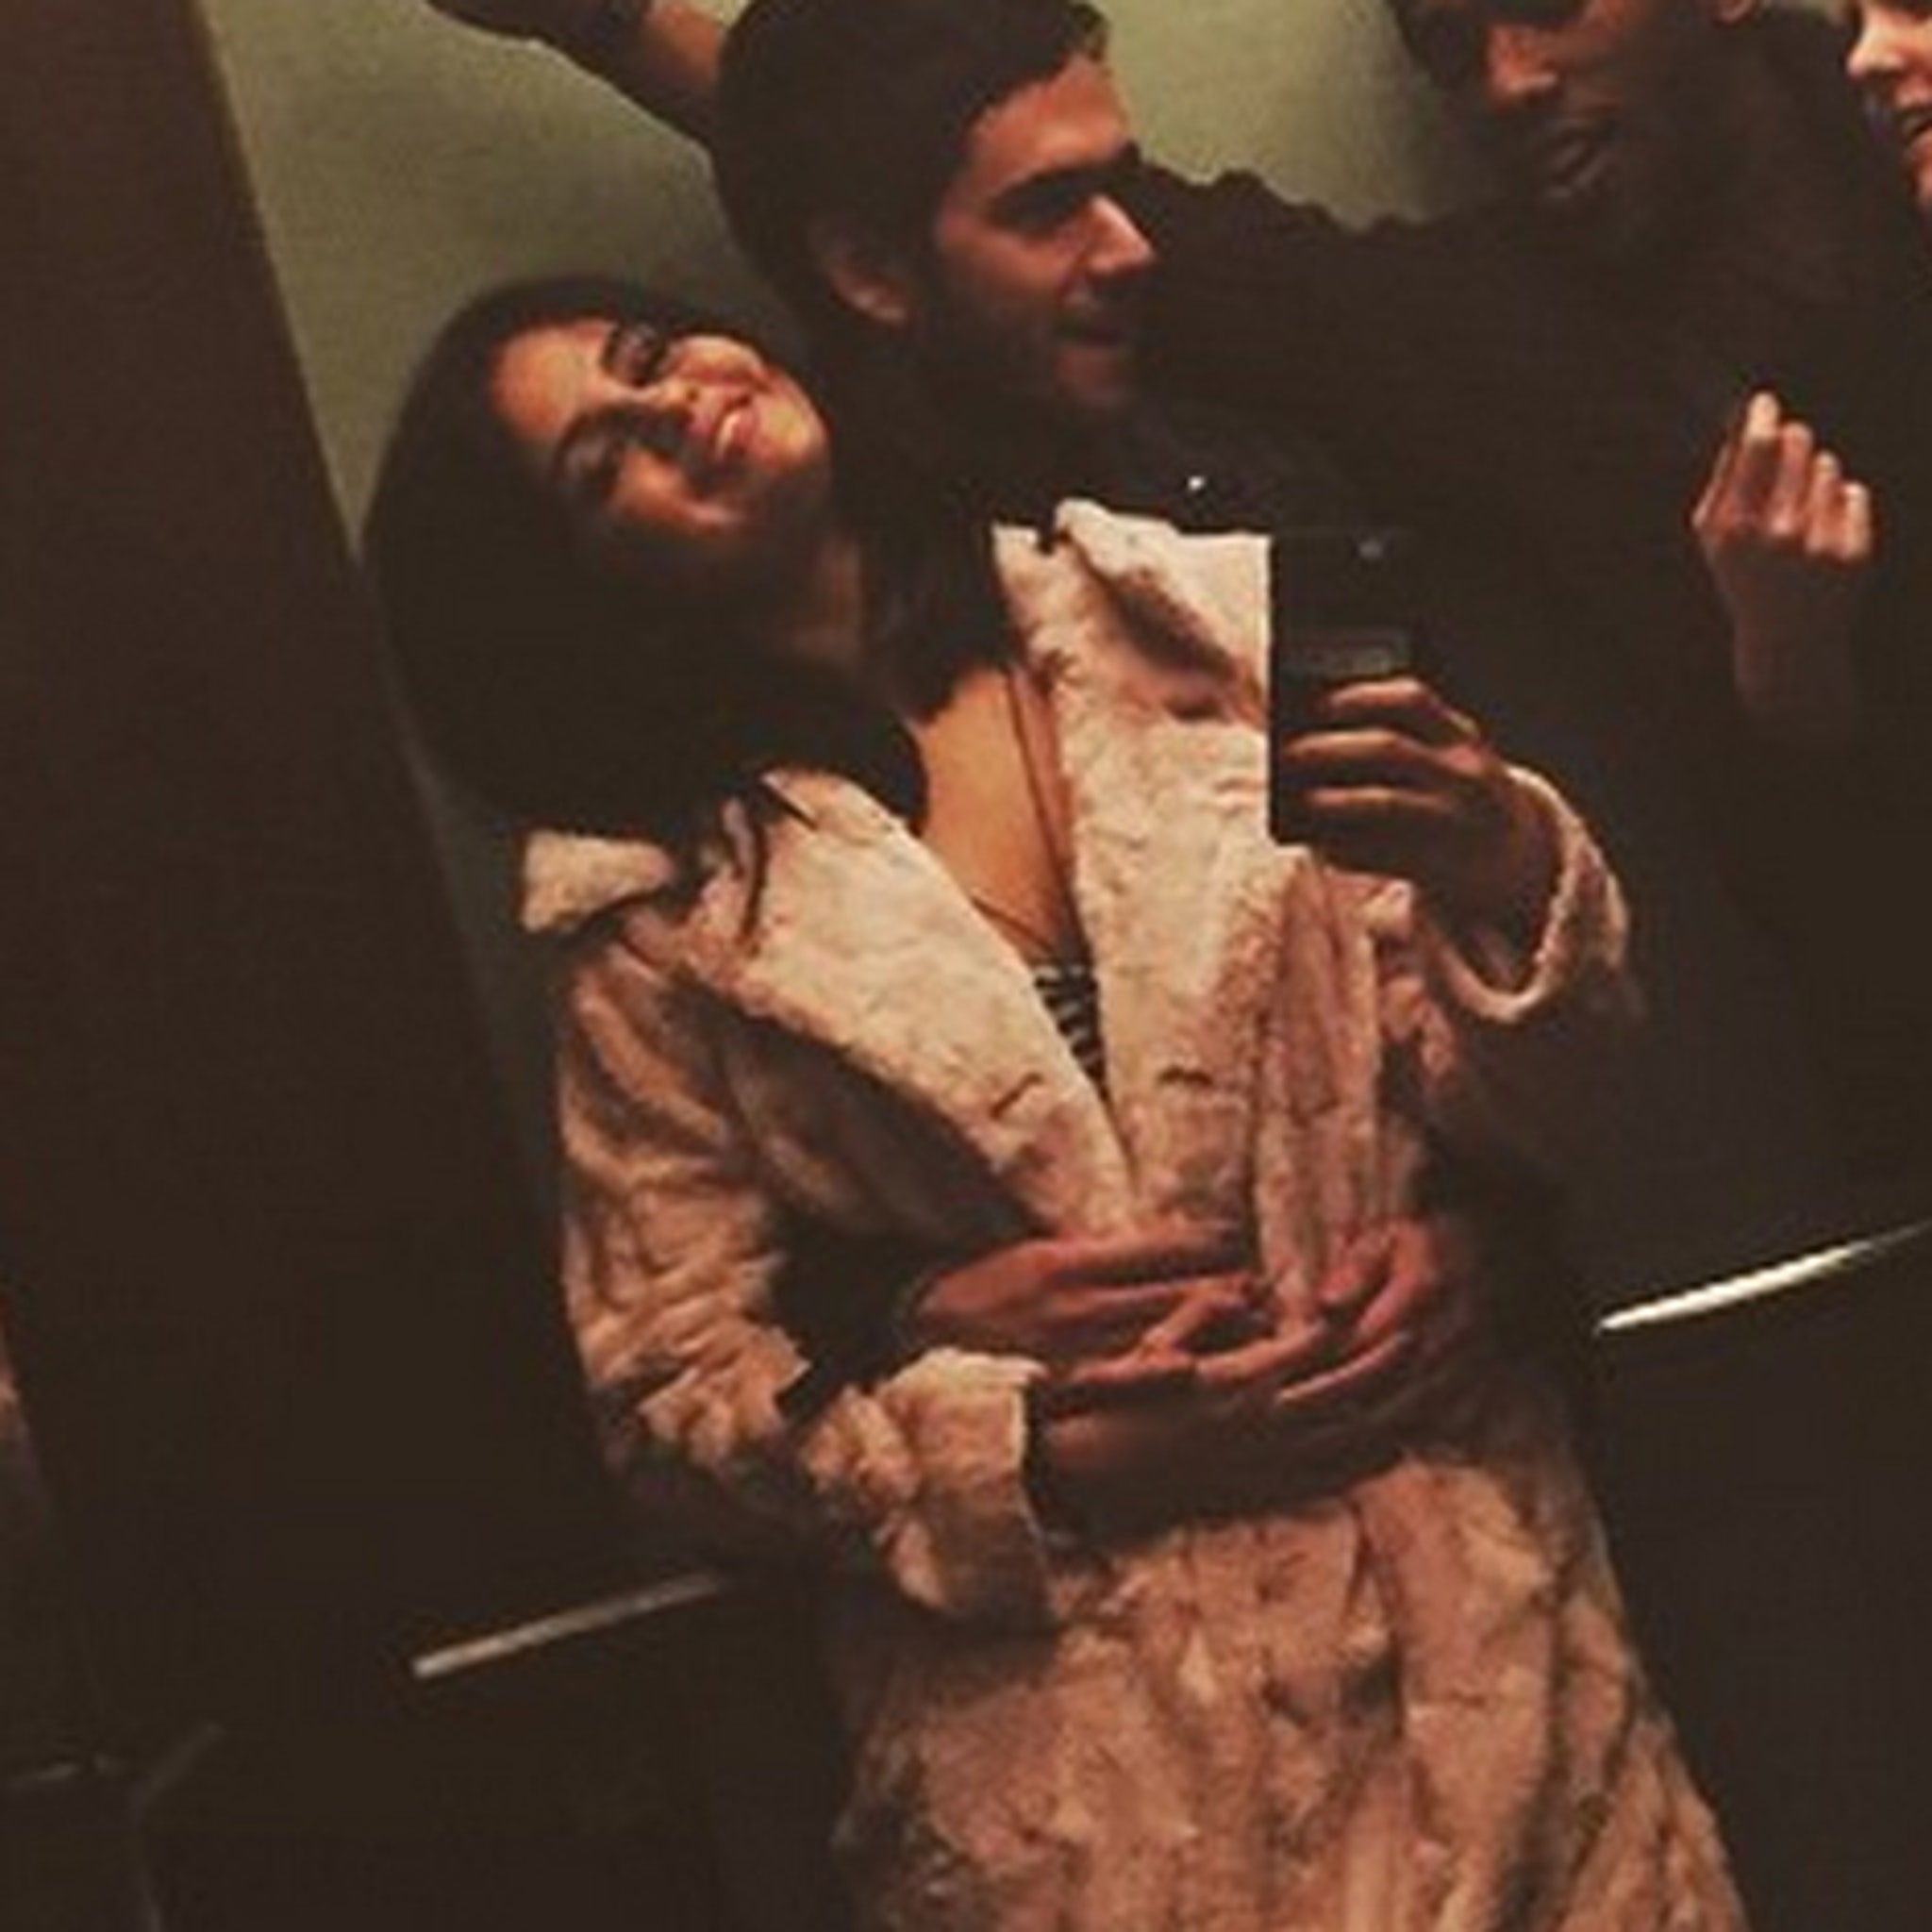 Selena Gomez Cuddles with Zedd In New Instagram Pic